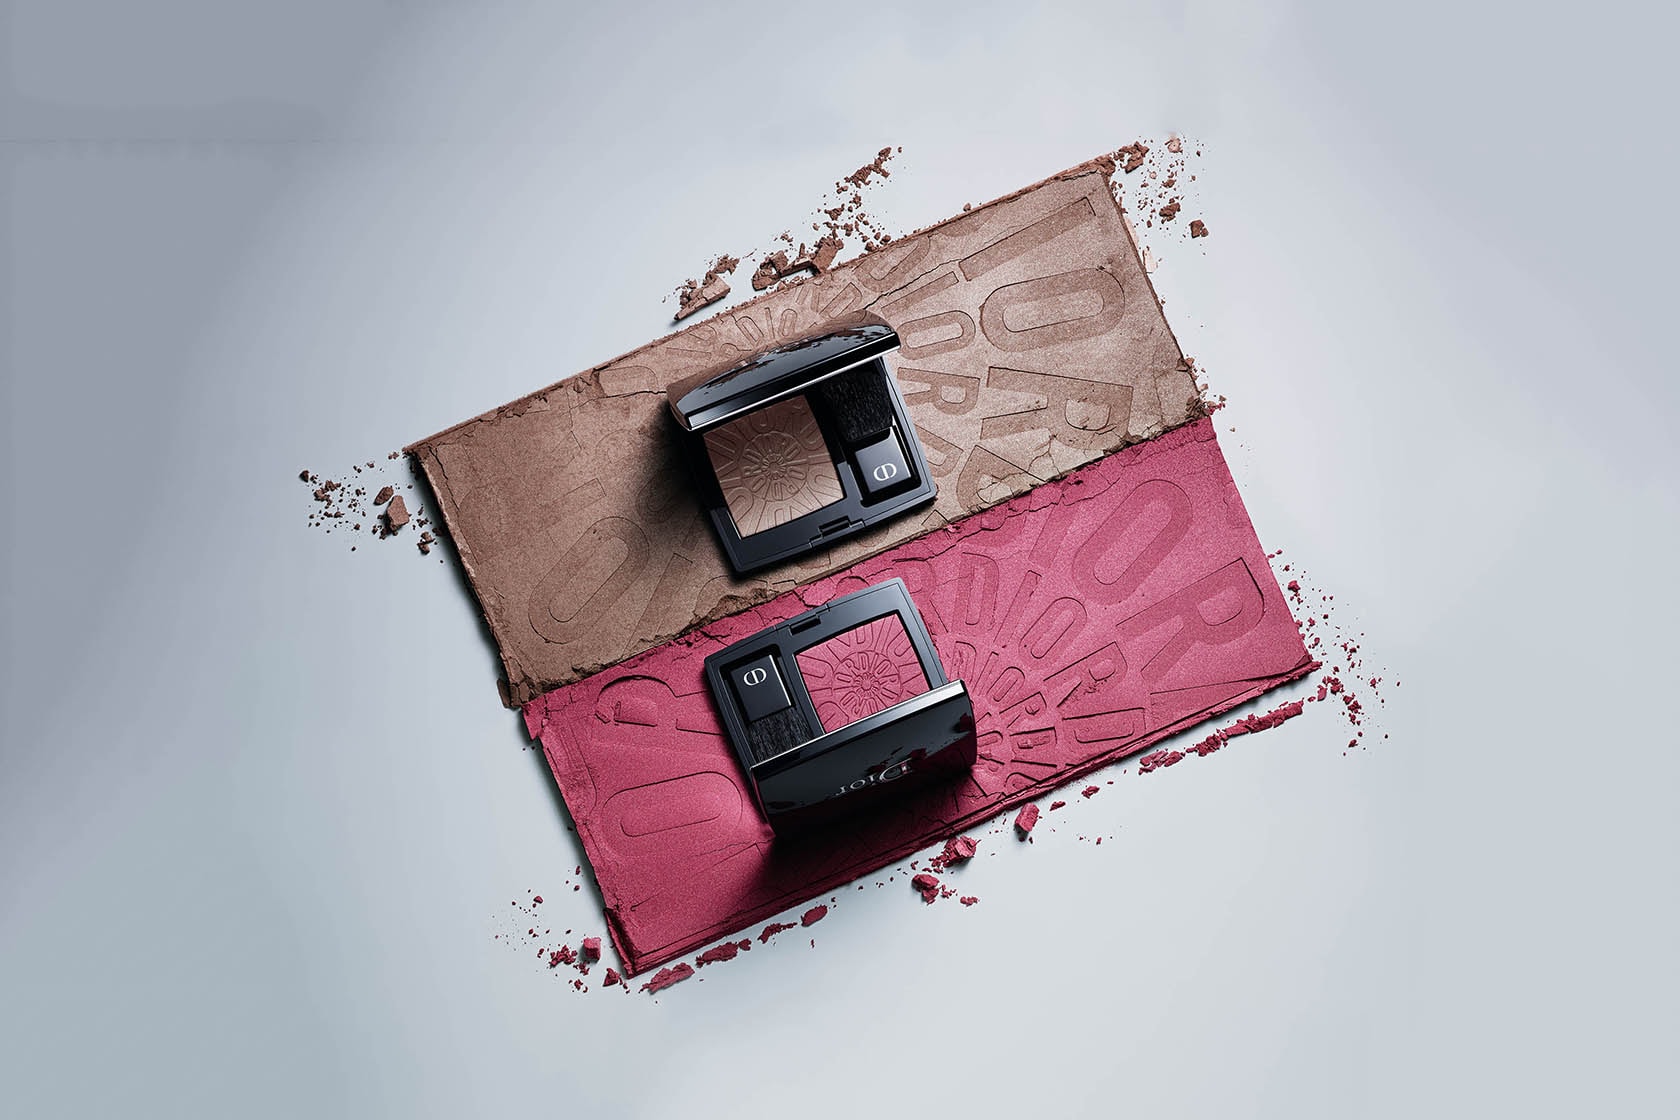 Dior Makeup Fall 2019 Power Look Eyeshadow Palette Lip Gloss